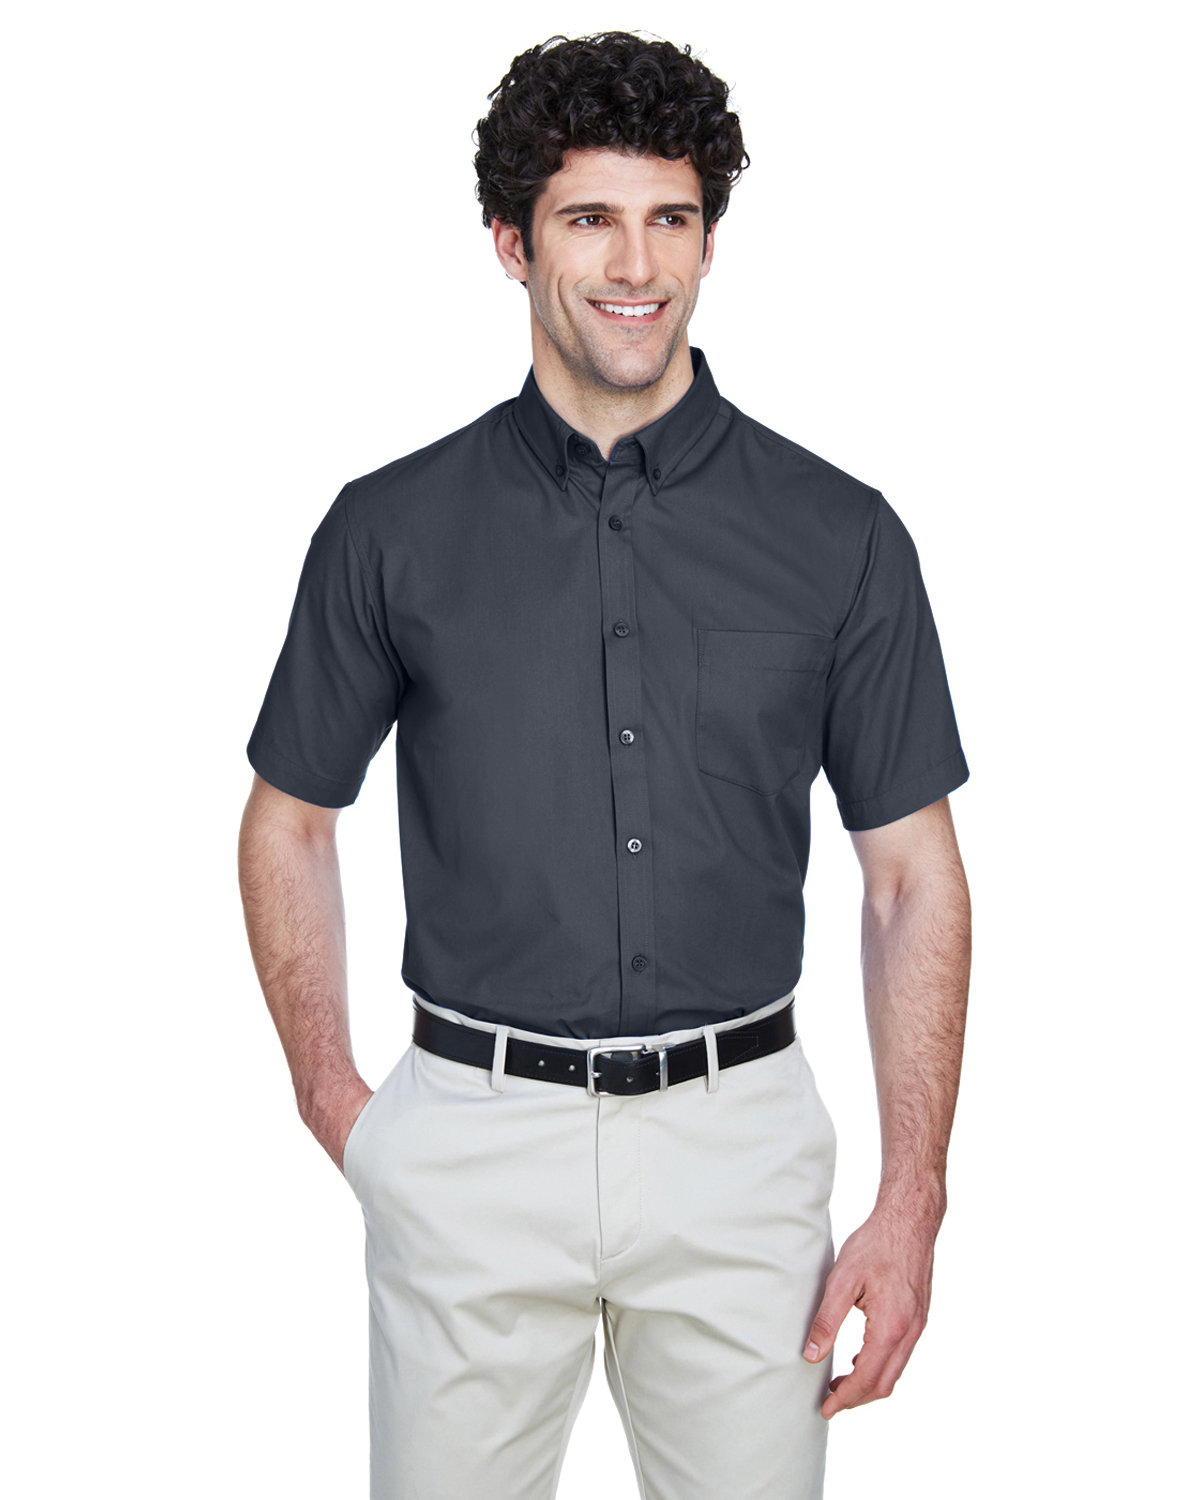 Core365 Men's Optimum Short-Sleeve Twill Shirt CARBON 